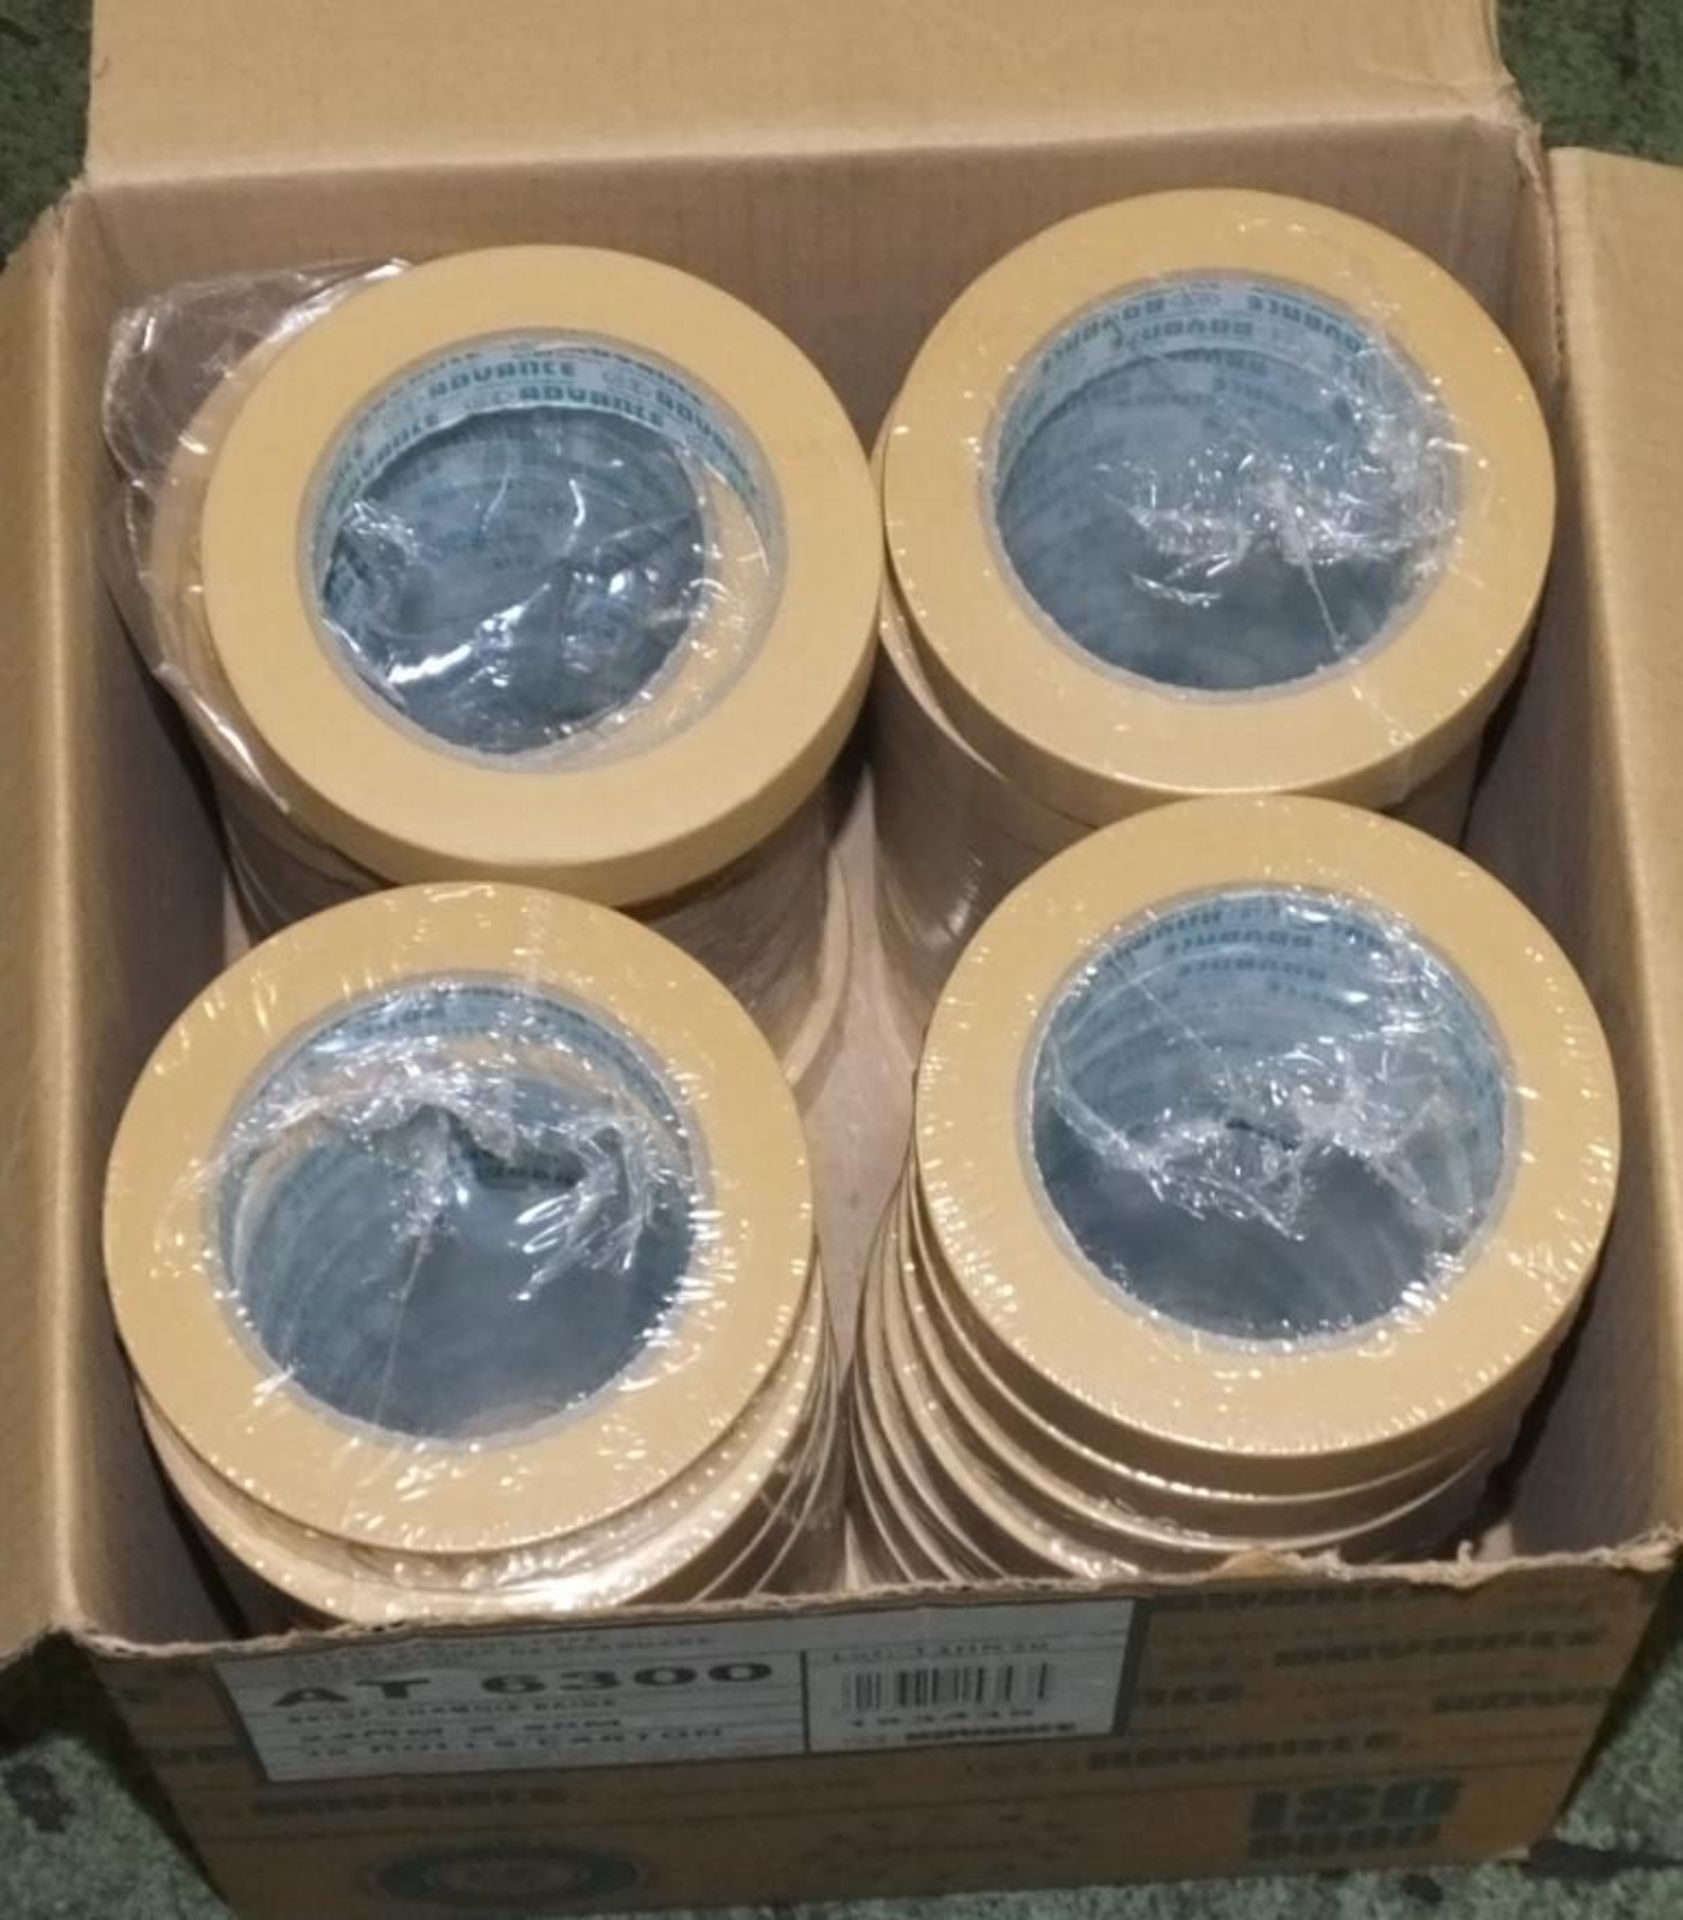 36 rolls of 1 inch masking tape